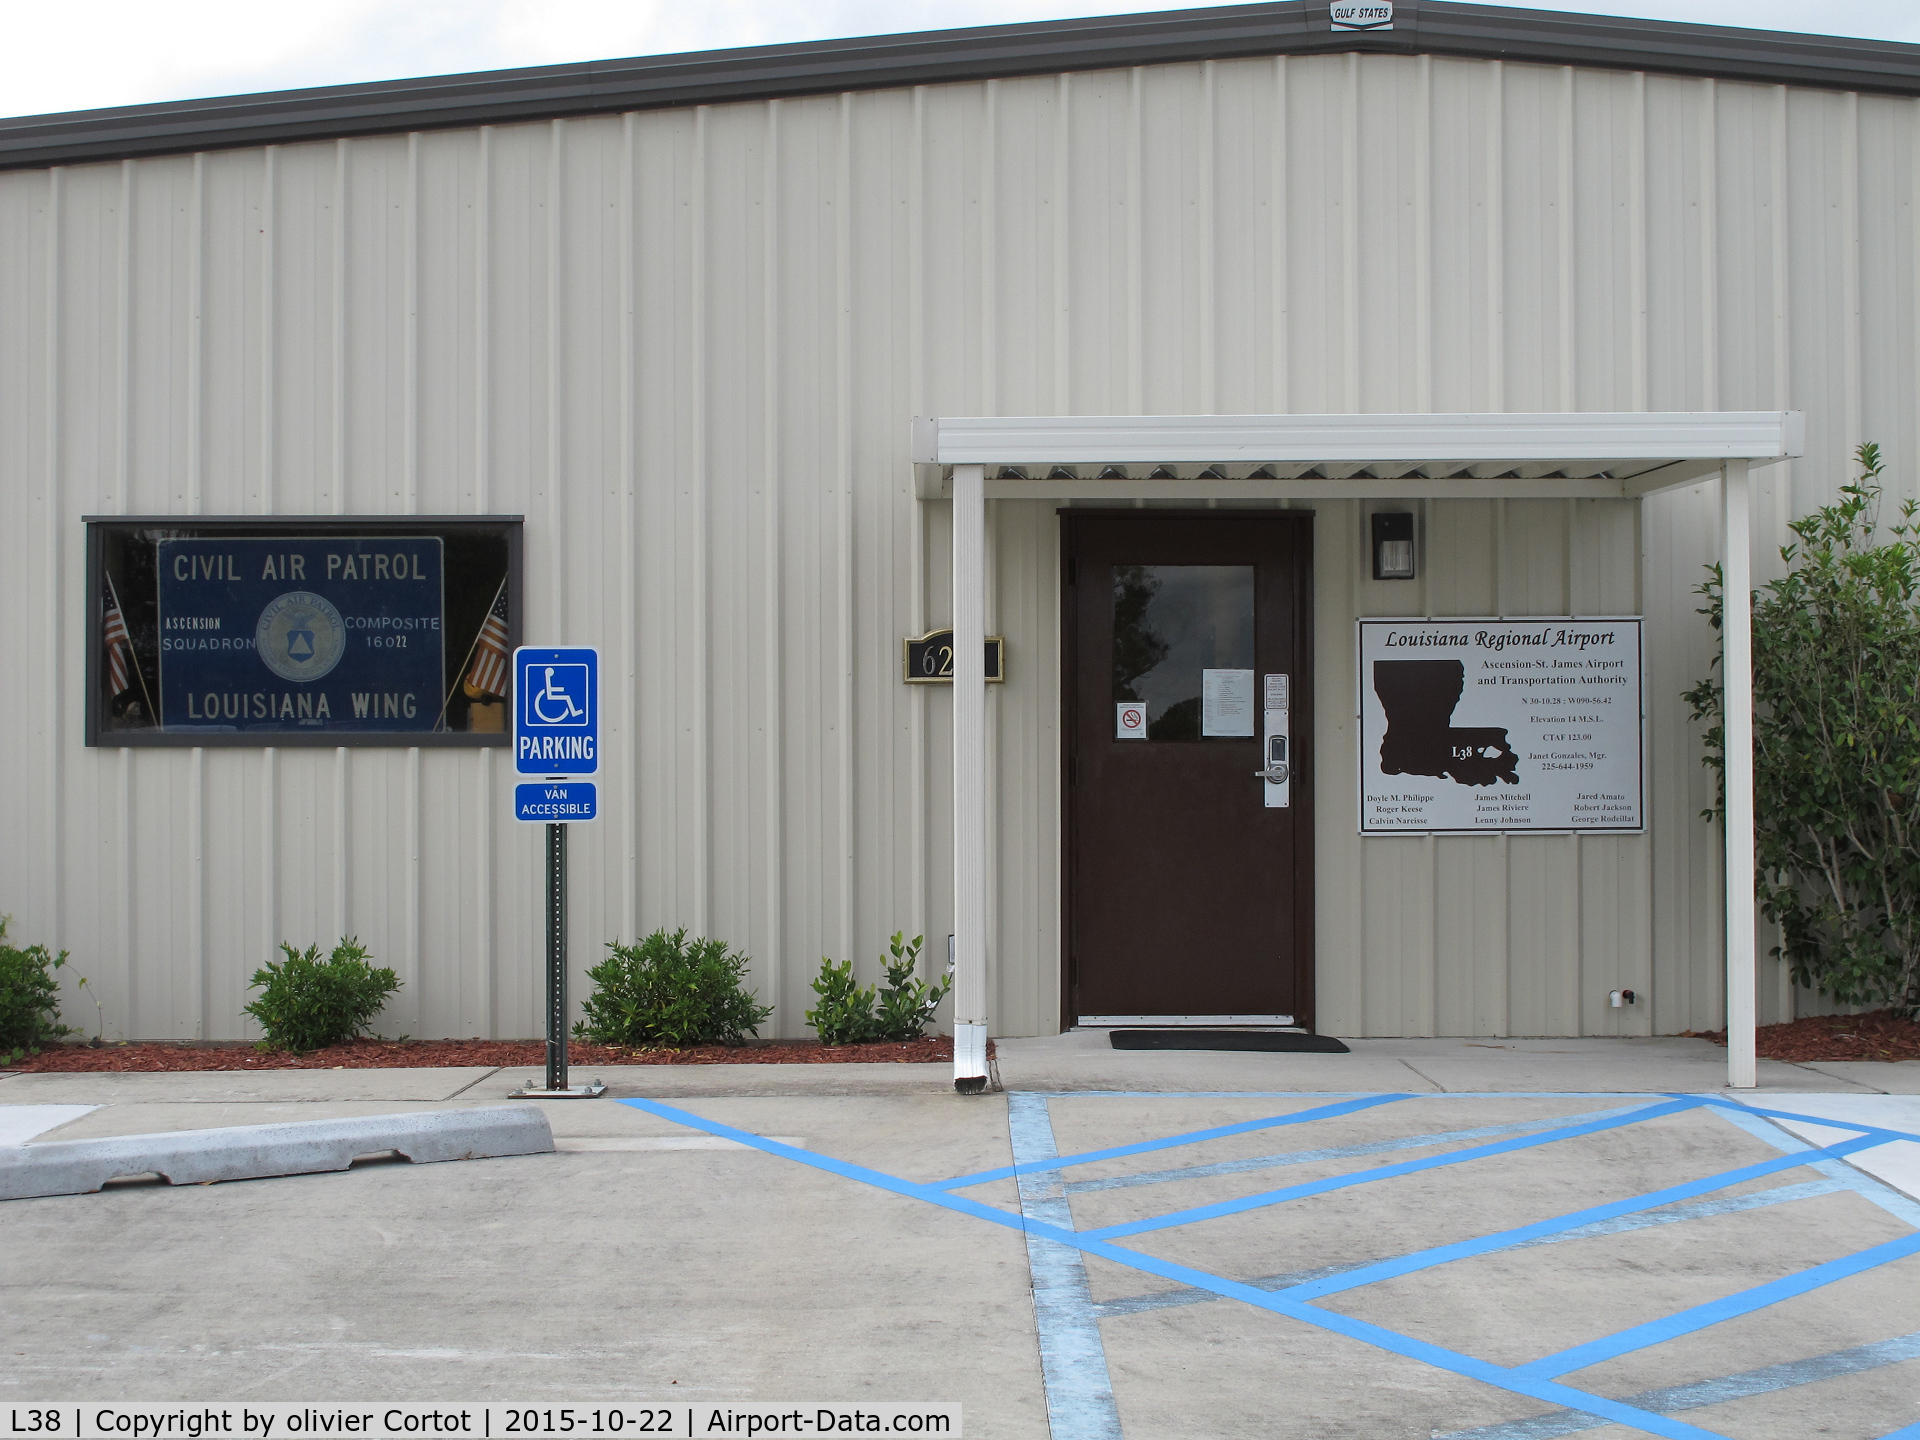 Louisiana Regional Airport (L38) - the office